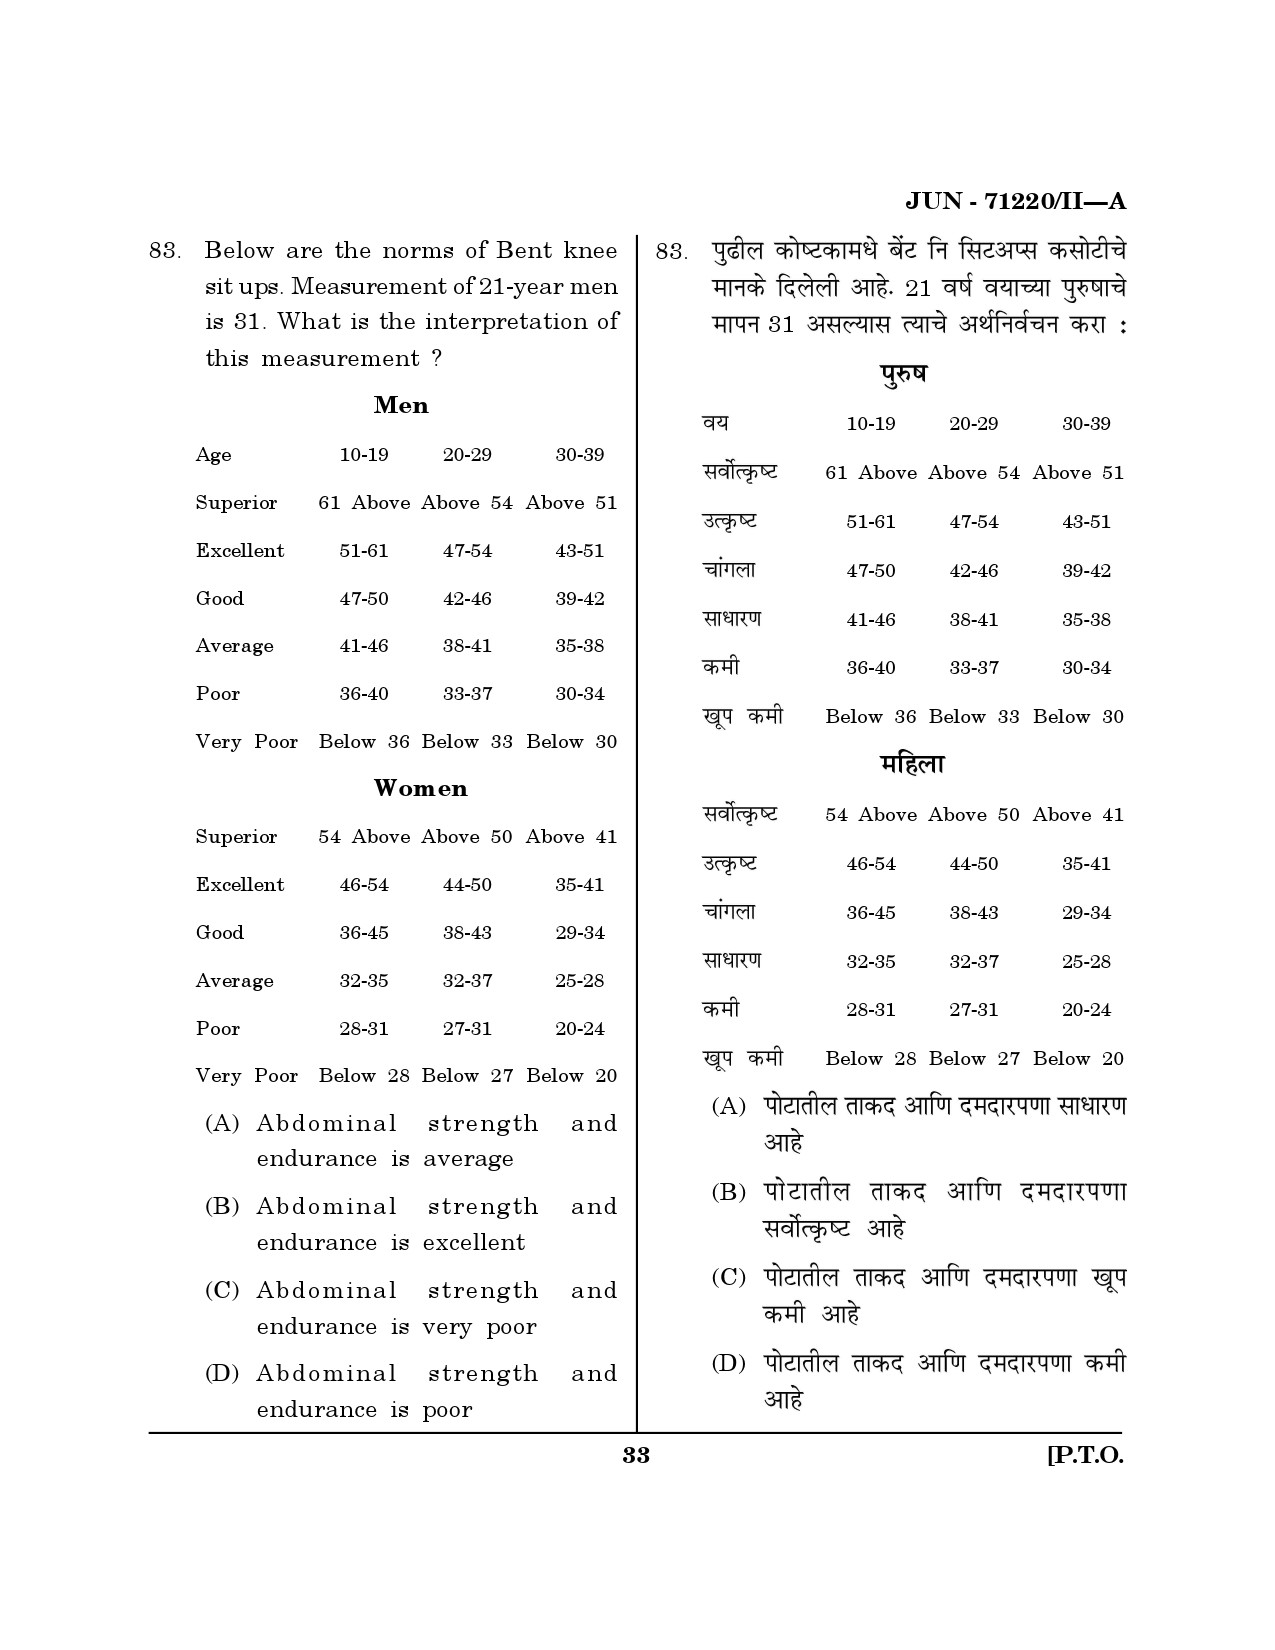 Maharashtra SET Physical Education Question Paper II June 2020 32